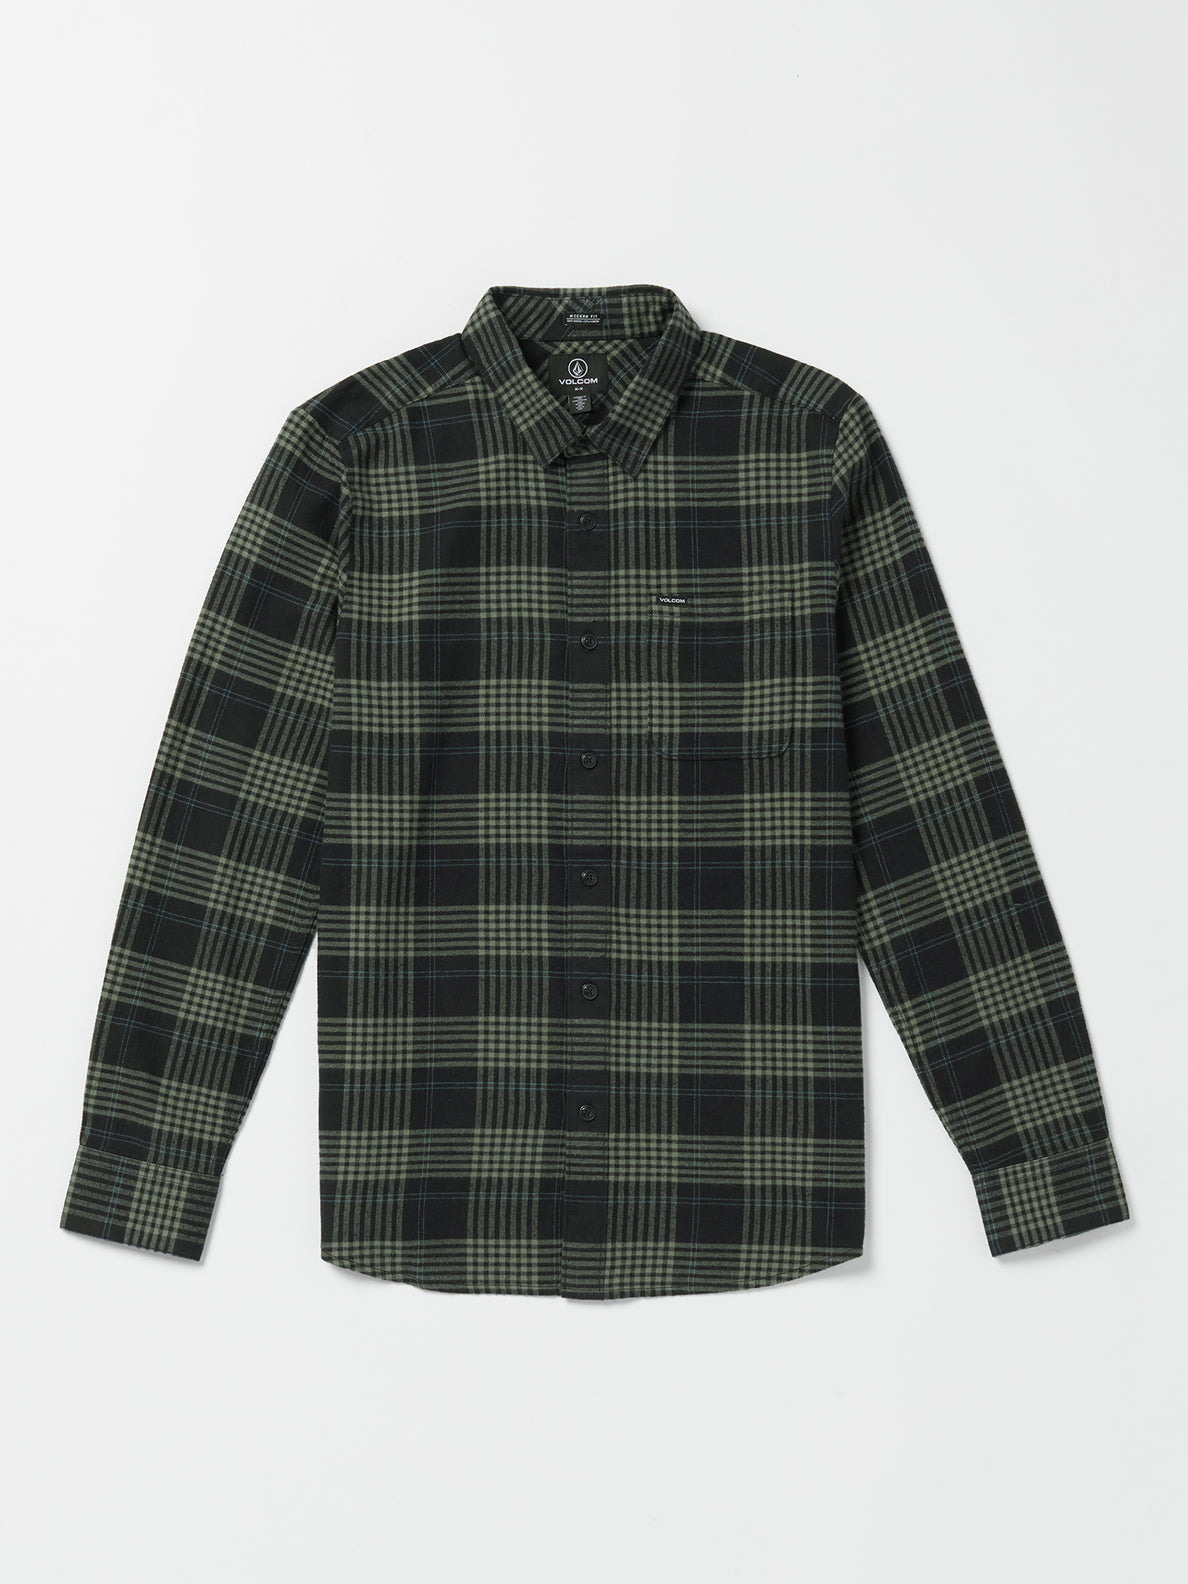 Green & Black Plaid Flannel Shirt for Men